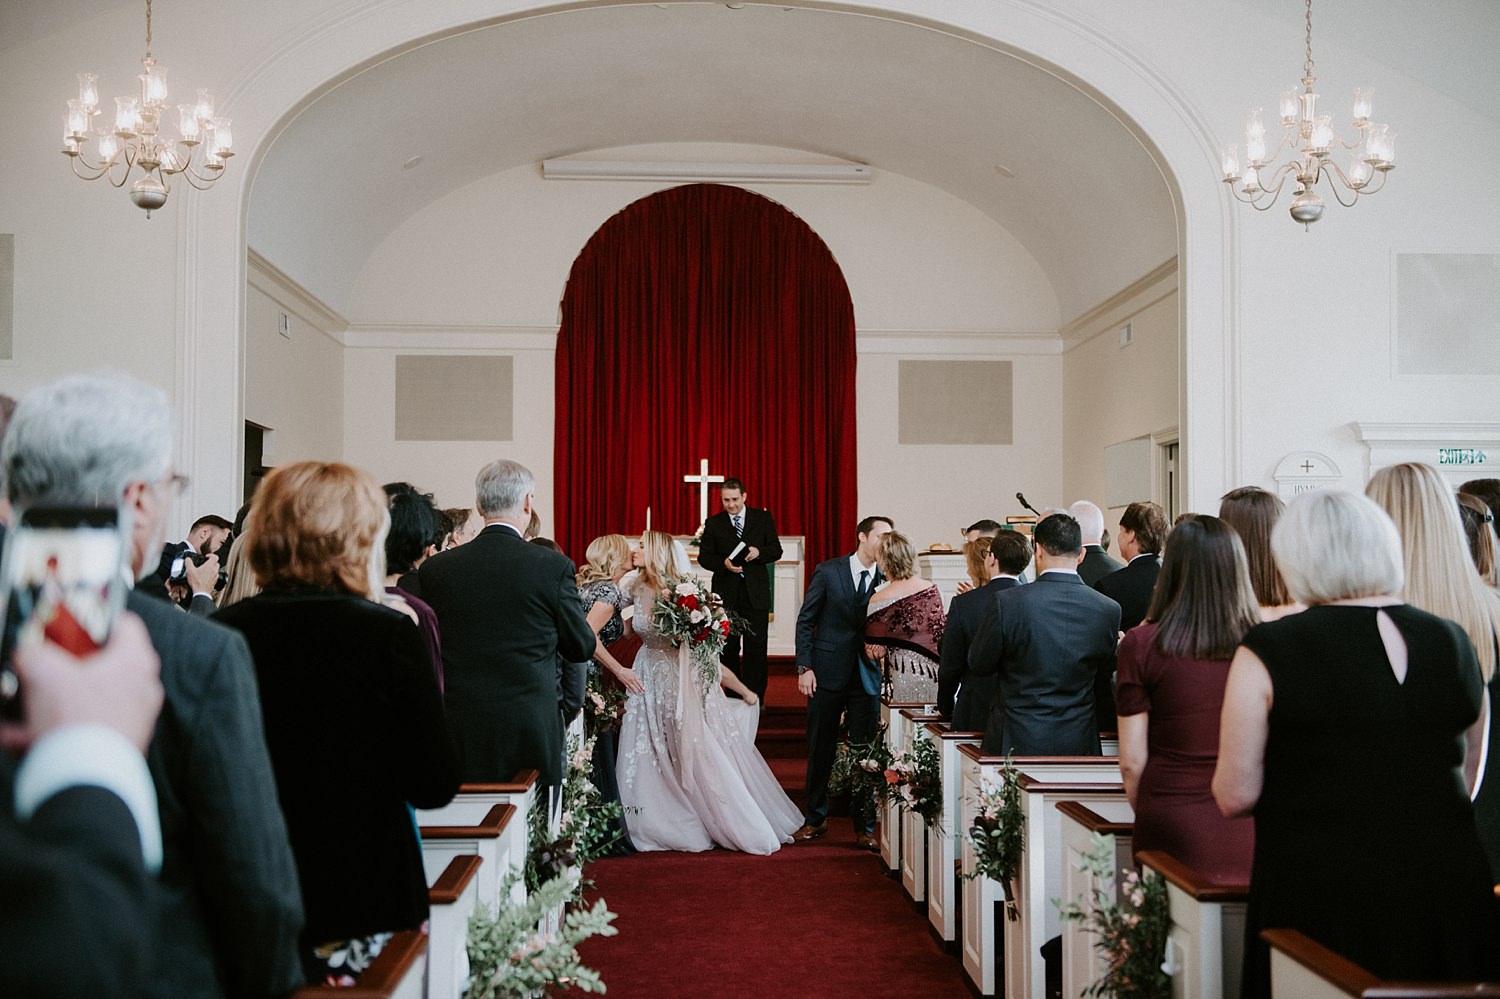 CT church wedding ceremony recessional celebration